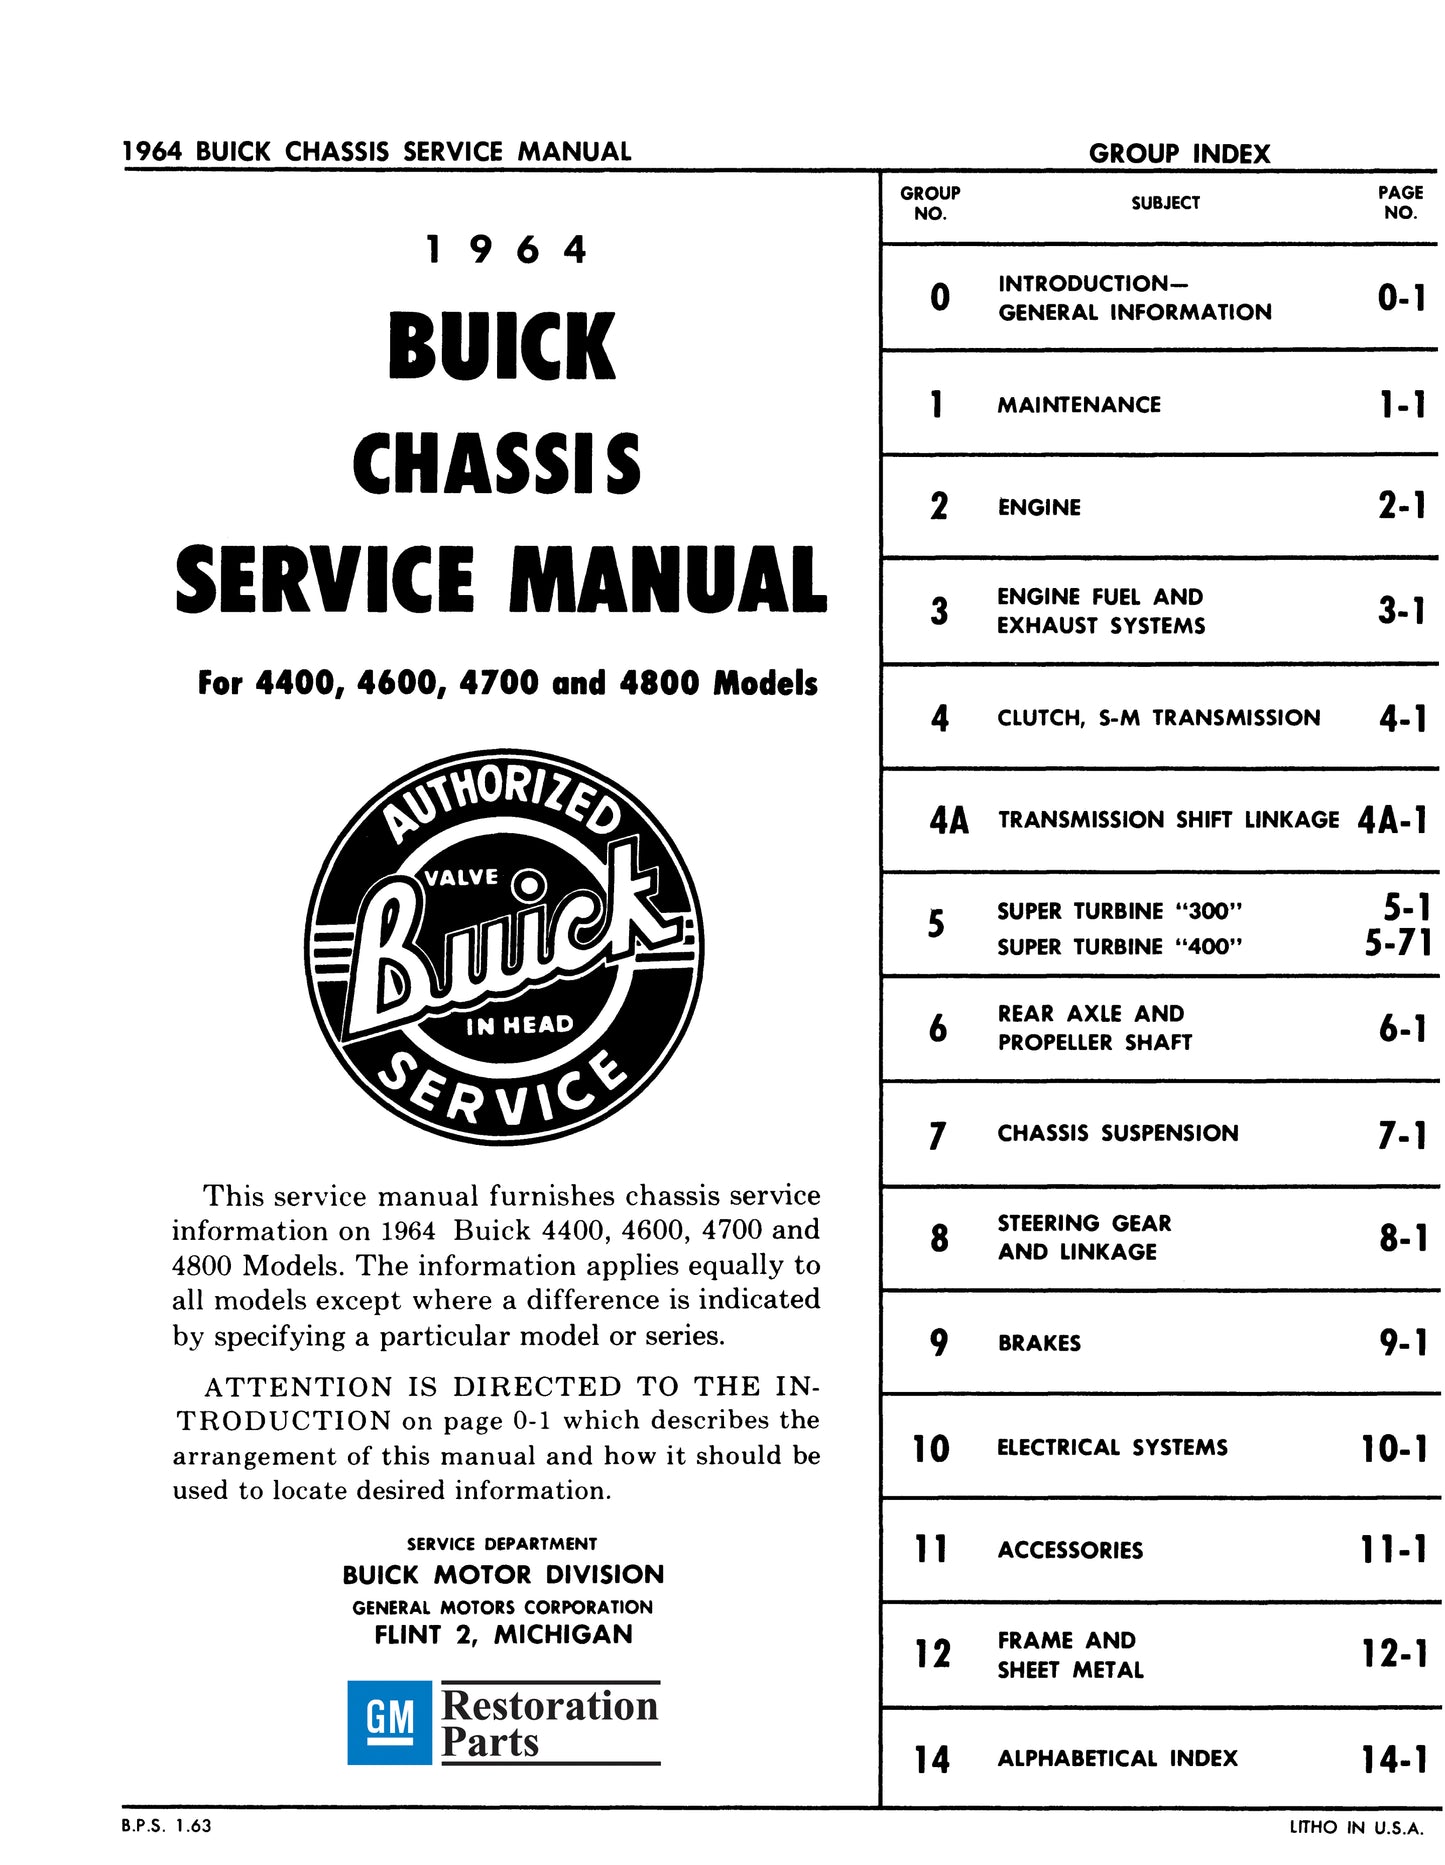 1964 Buick Repair Manuals - All Models